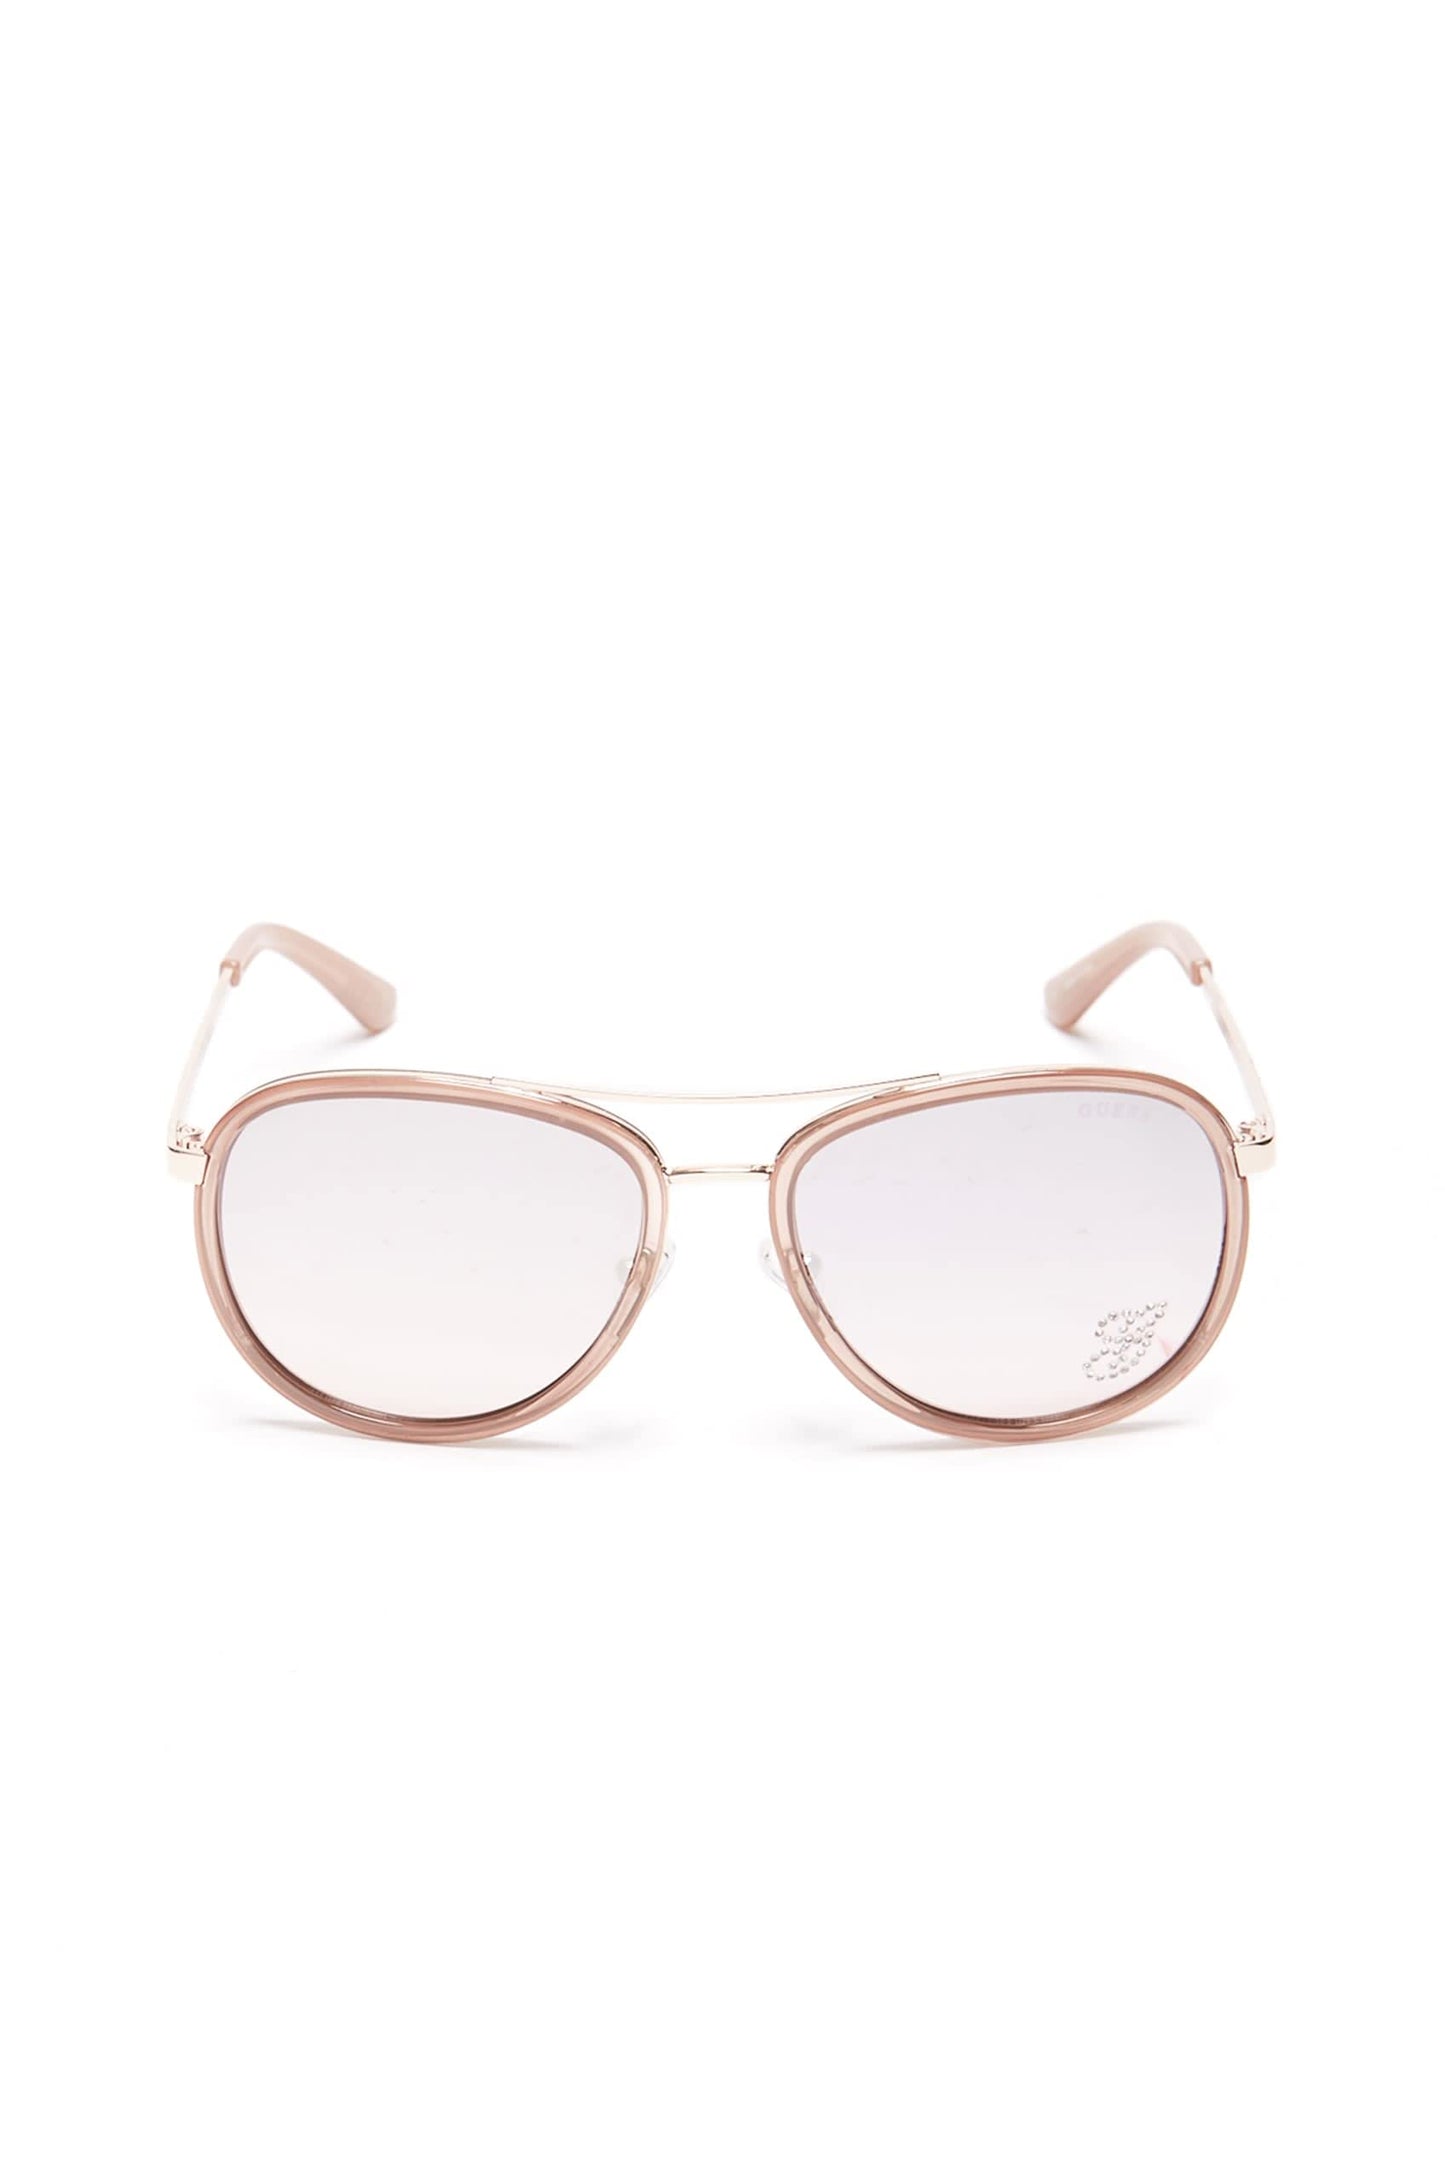 Guess Factory Gradient Aviator Women Sunglasses - (GF6052 28U 57 S |57| Pink Color Lens)